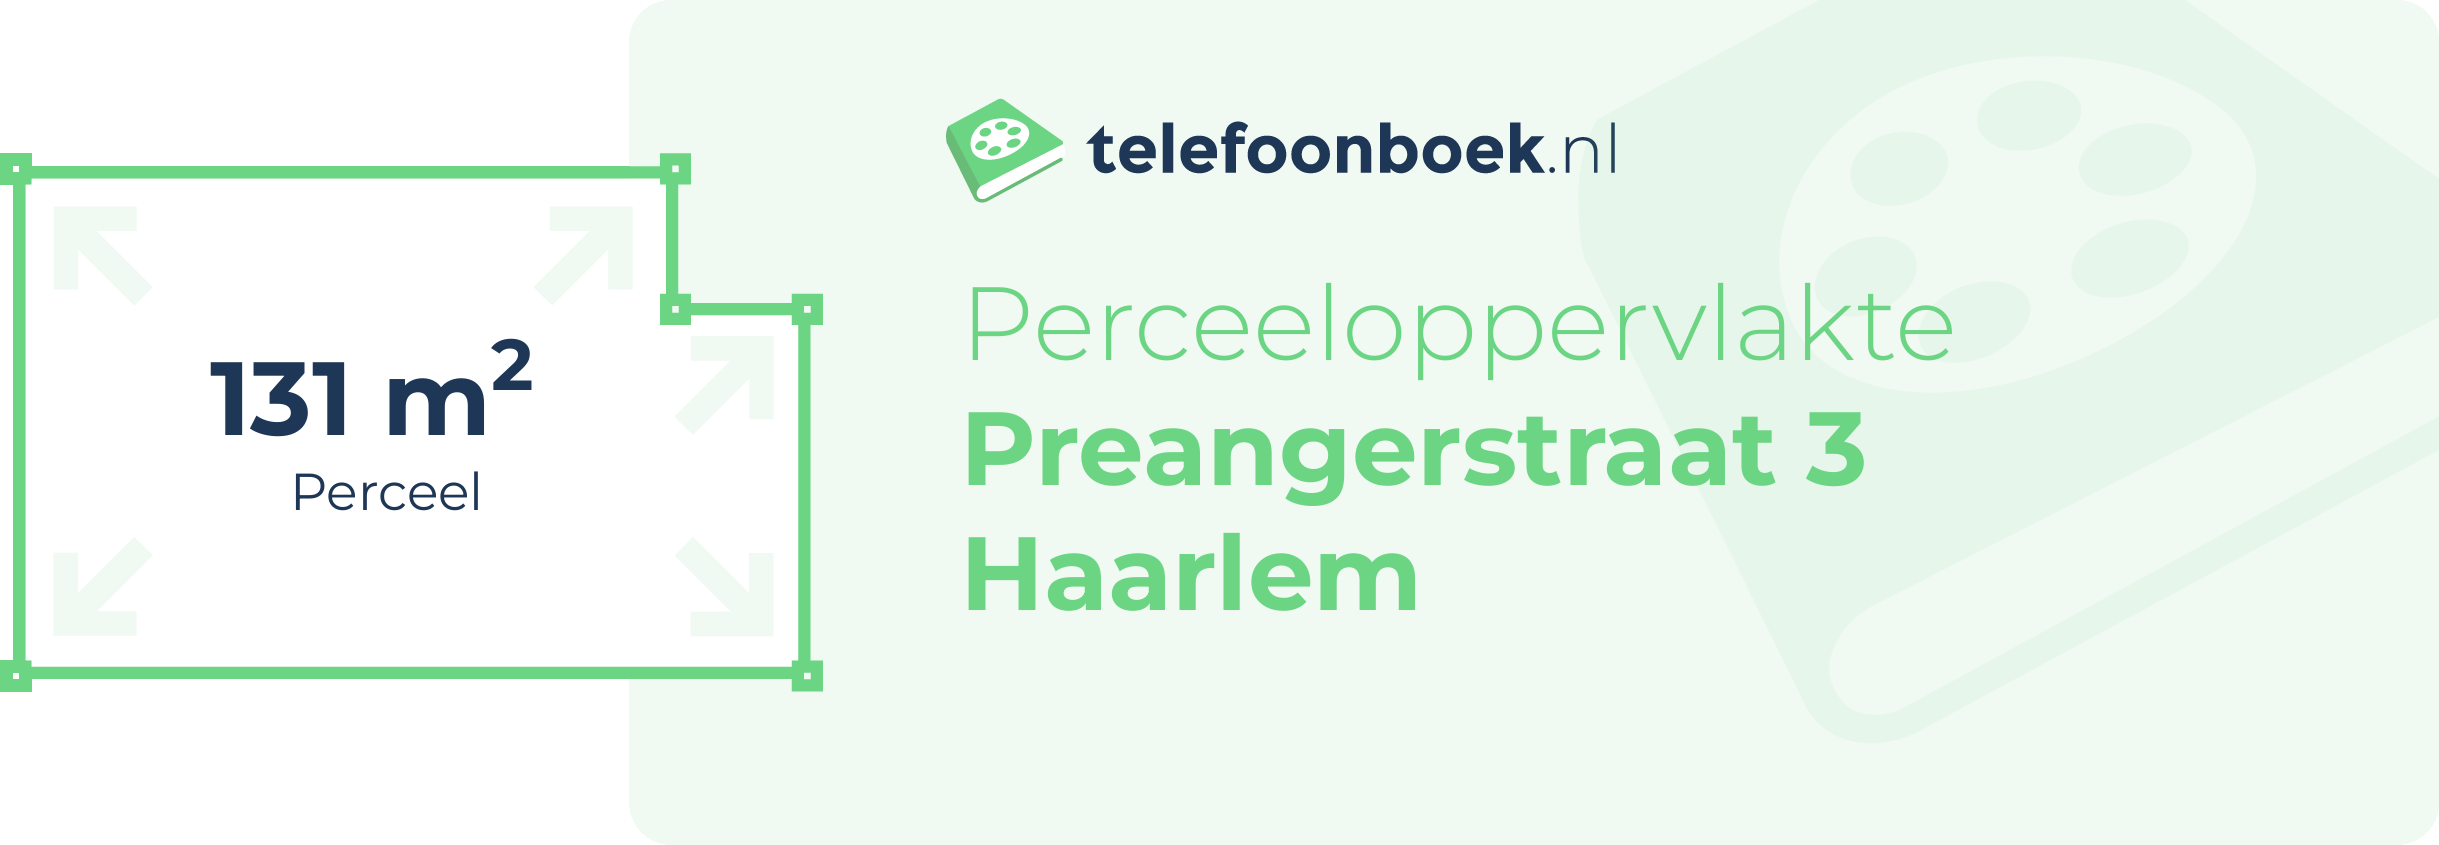 Perceeloppervlakte Preangerstraat 3 Haarlem